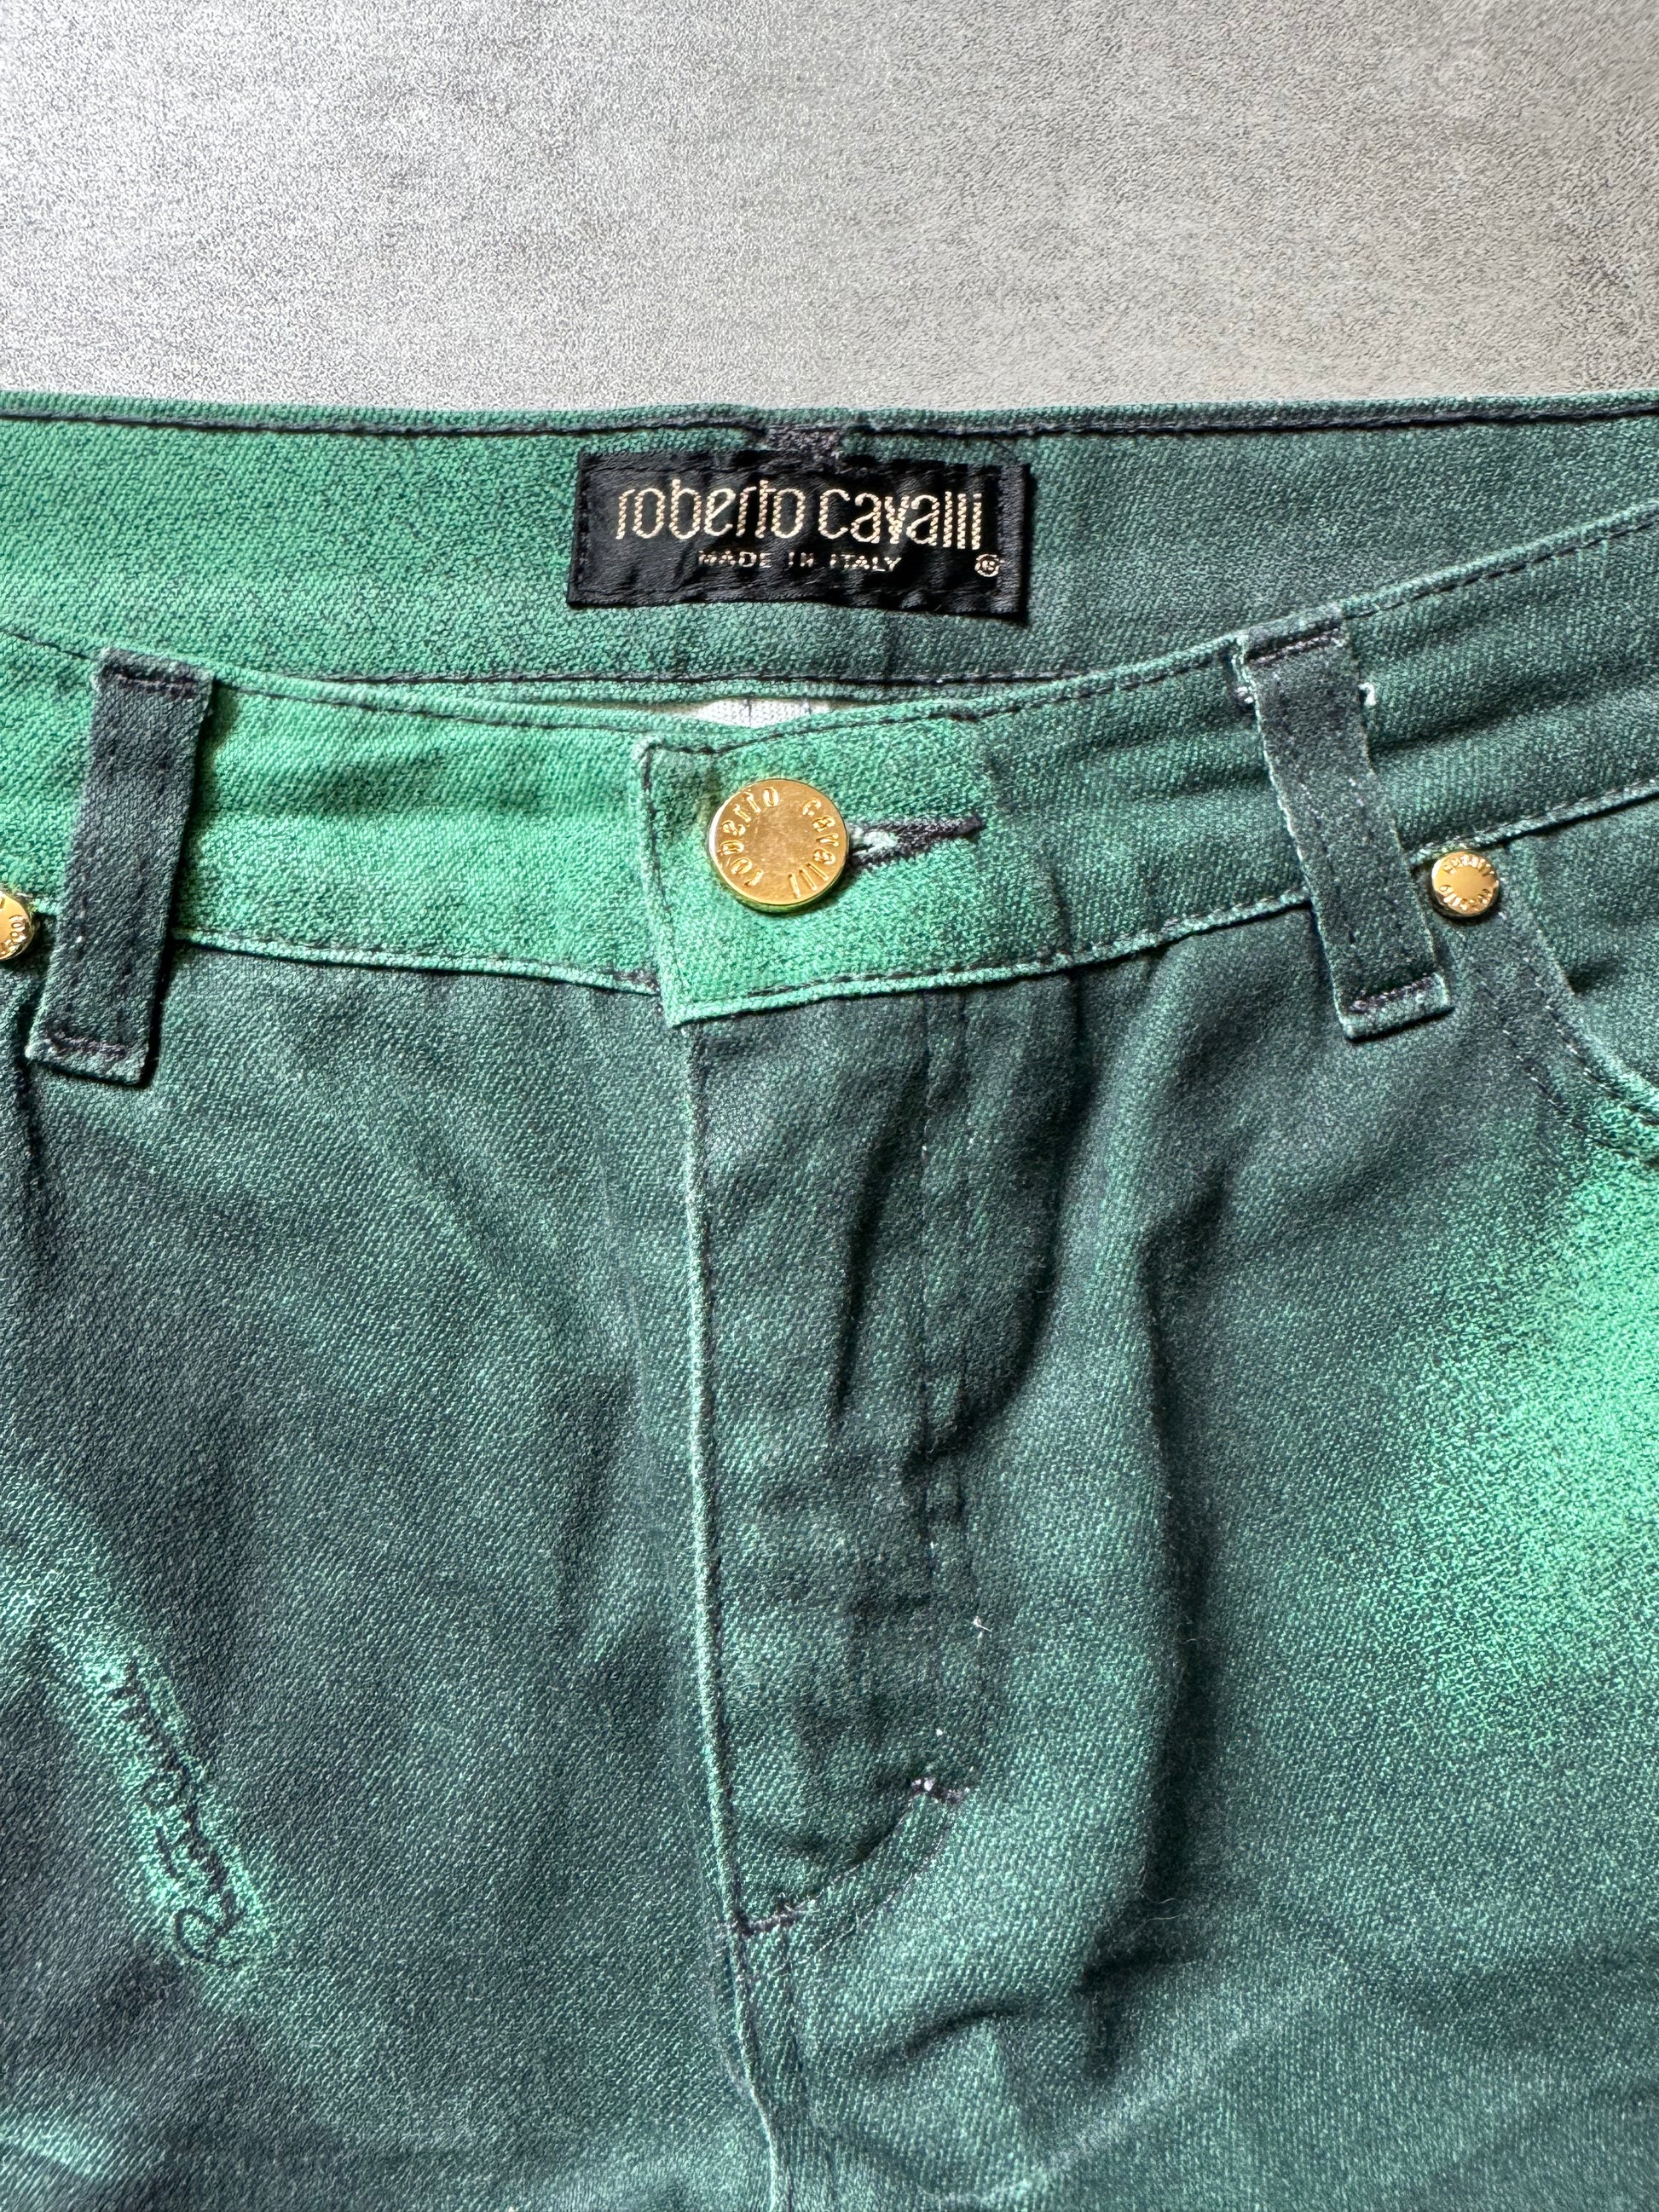 AW2000 Roberto Cavalli Floral Green Spectrum Pants (M) - 7